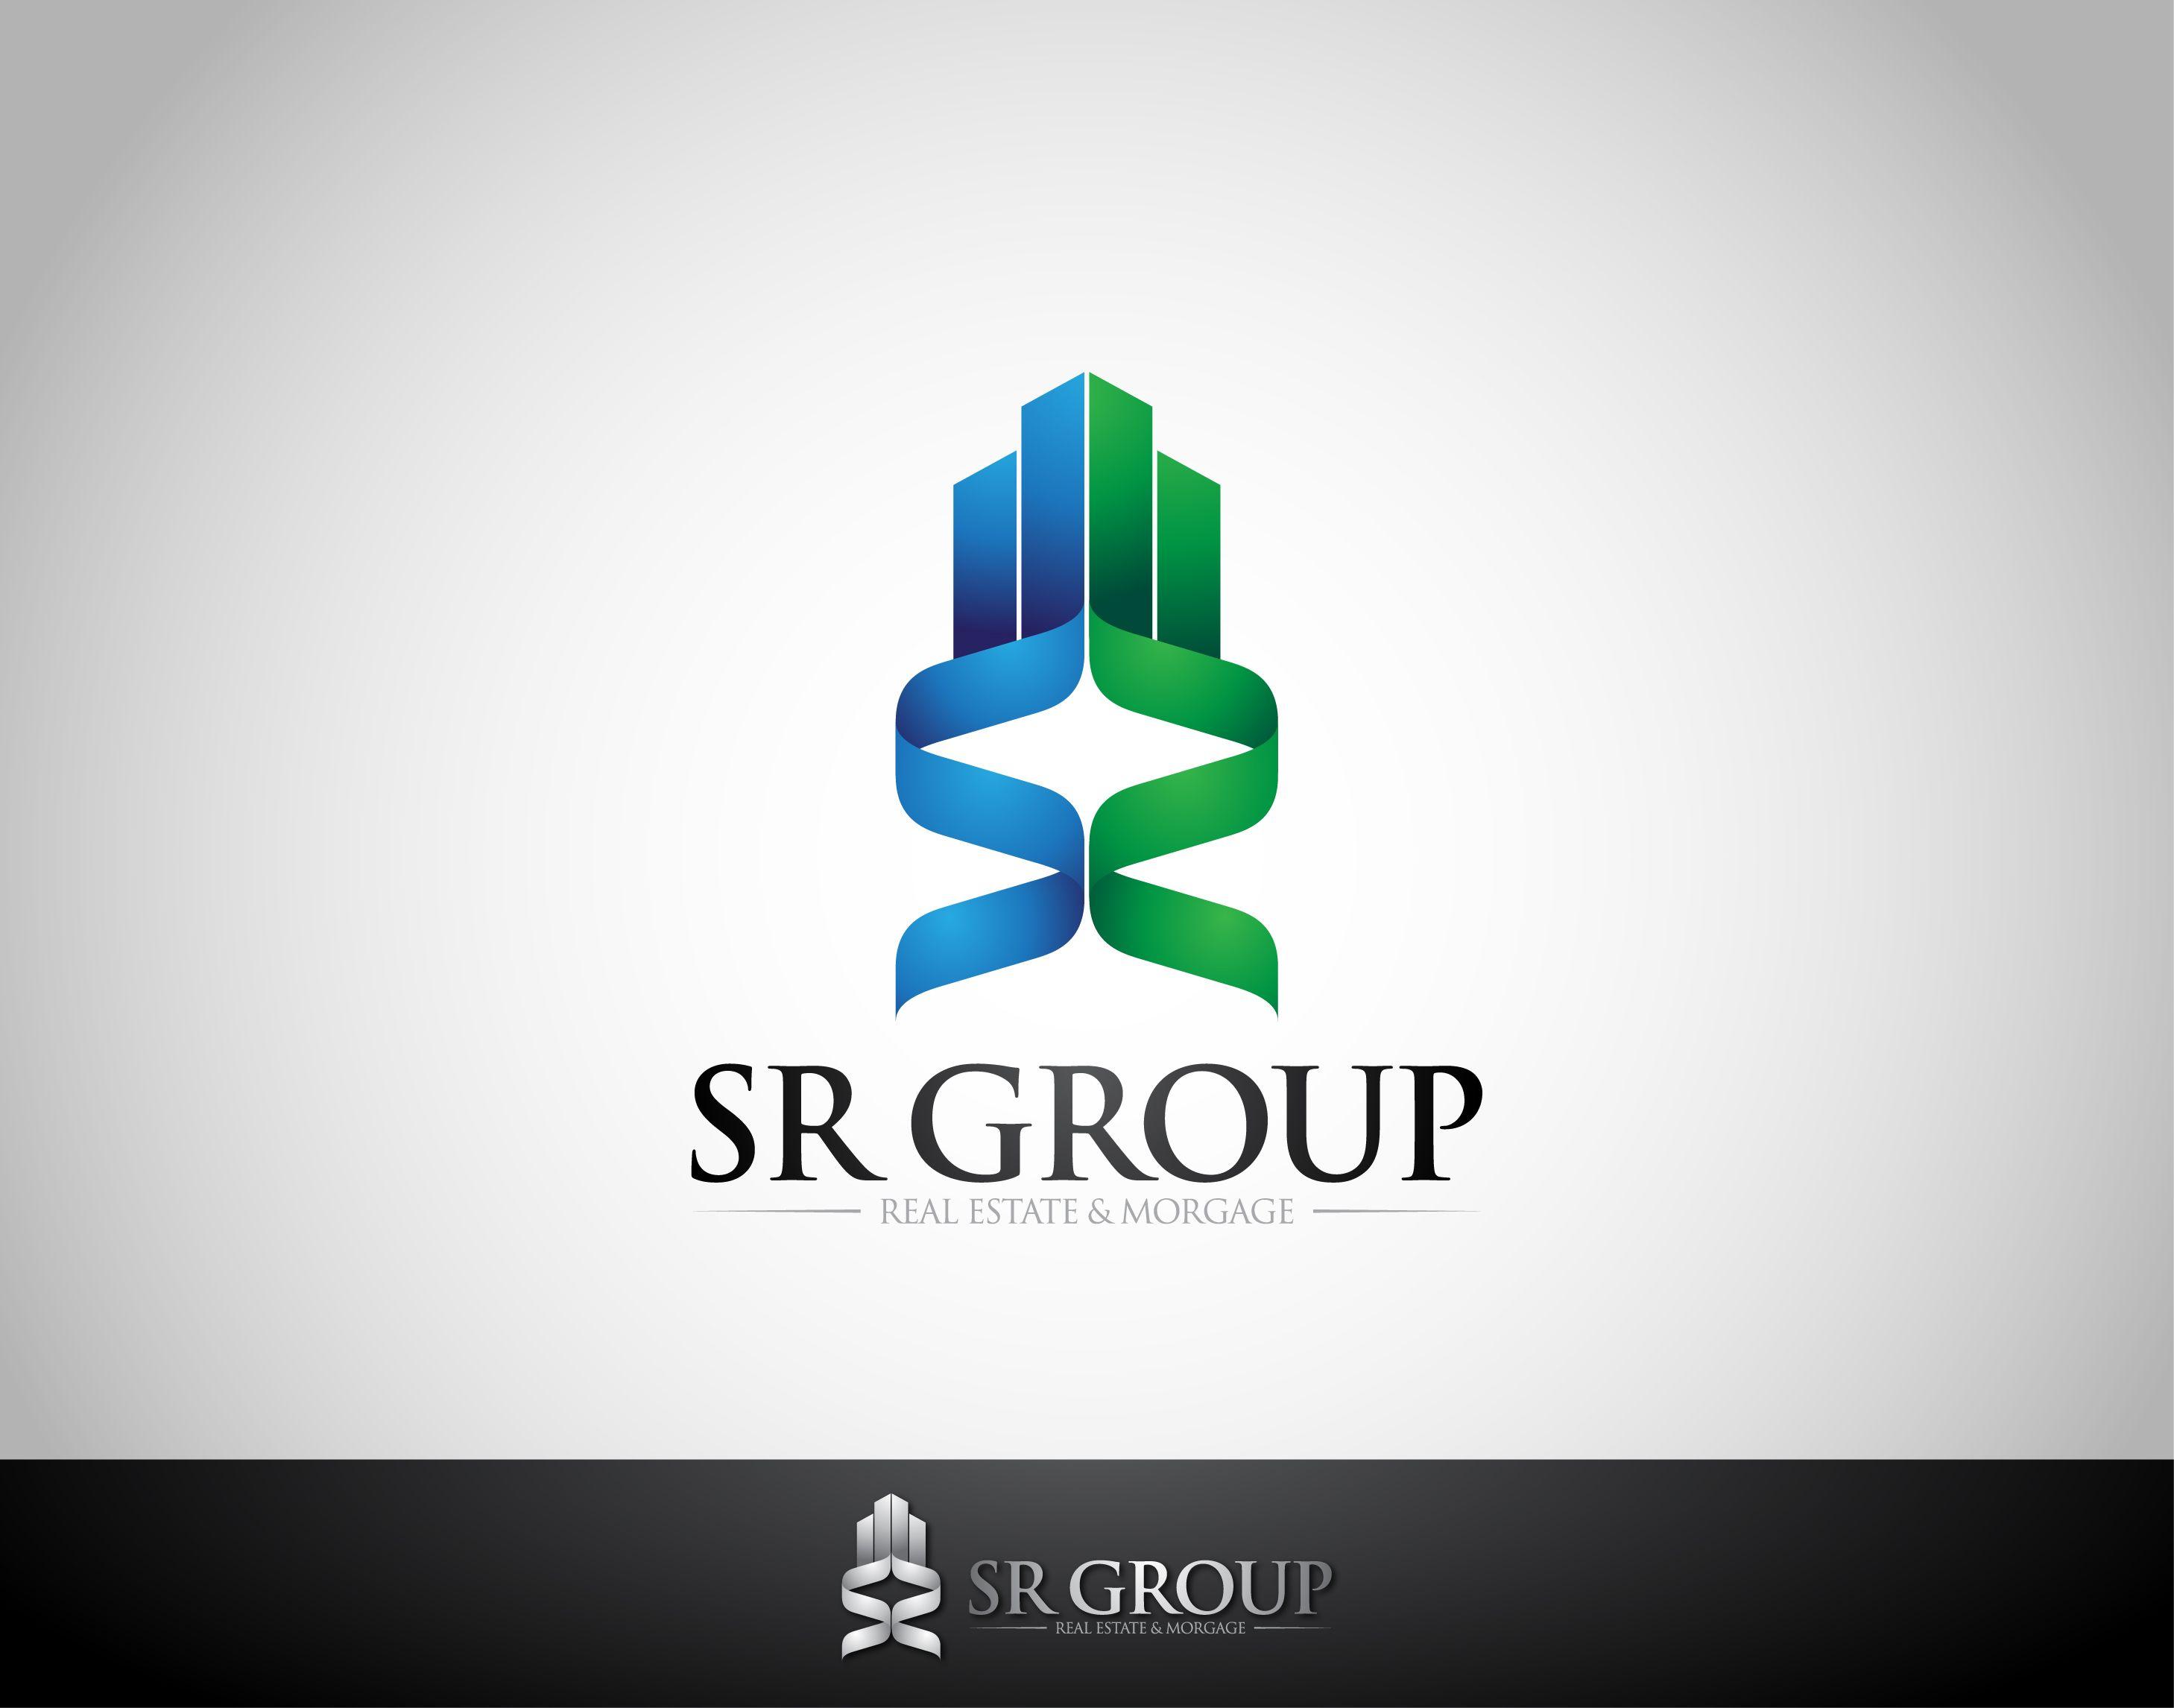 Sr Logo - Gallery. Logo Design for Real Estate Company SR GROUP